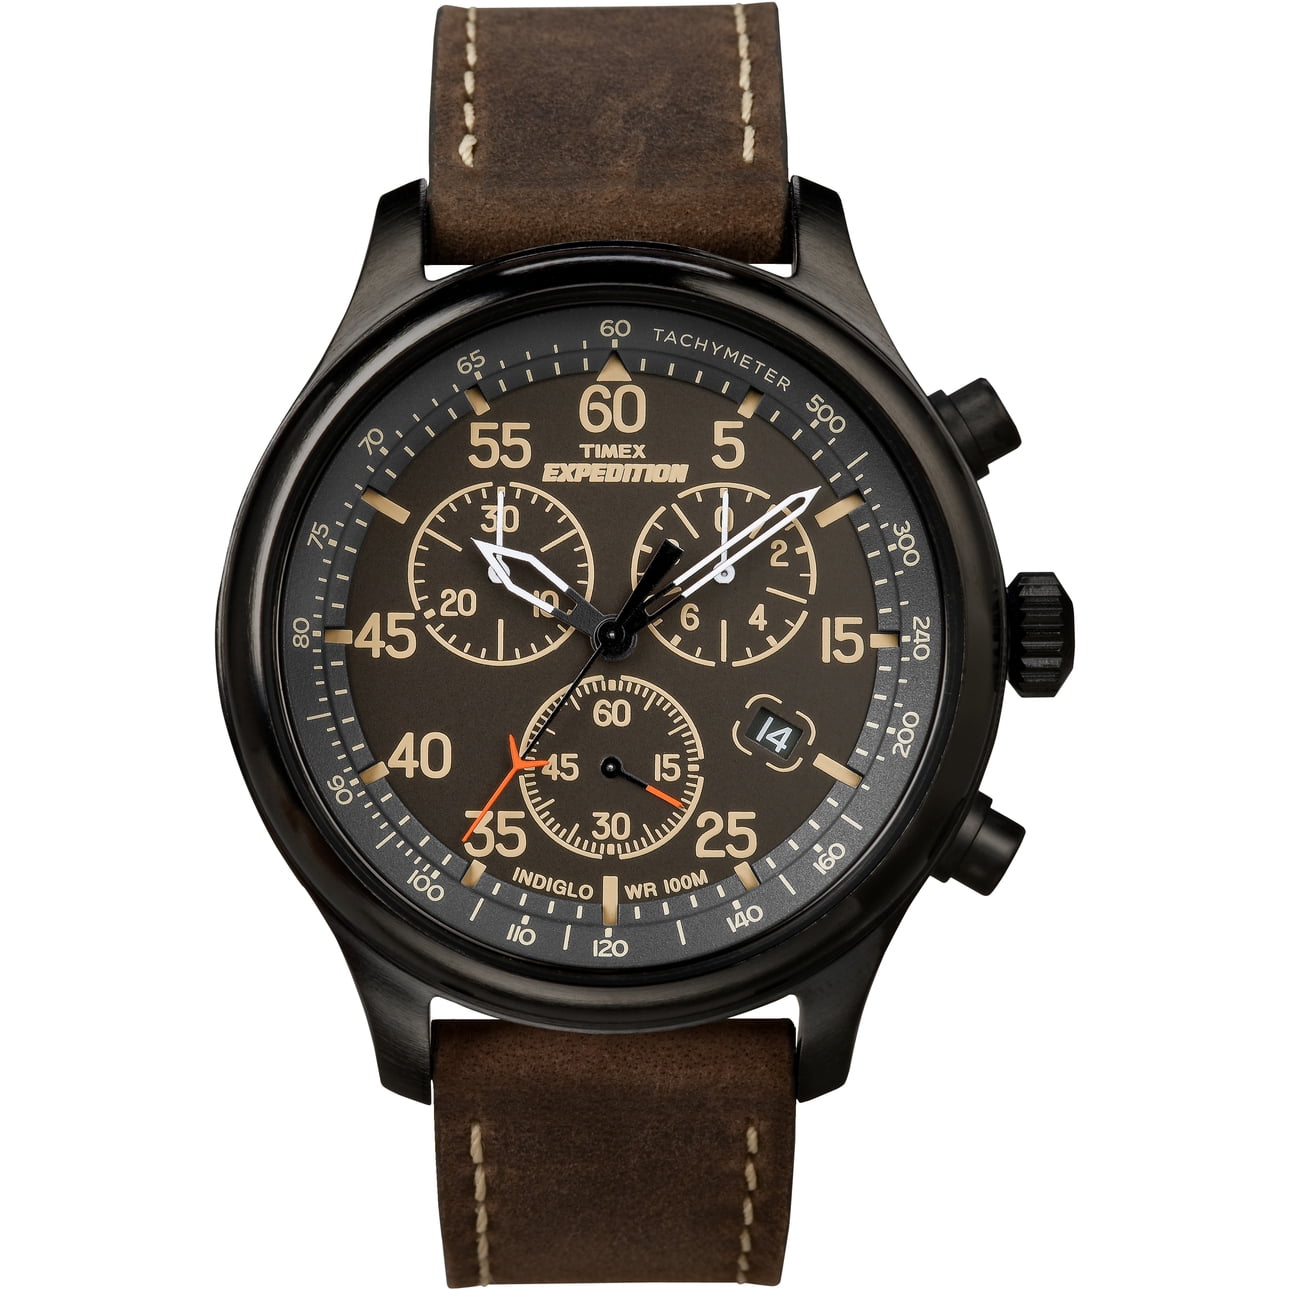 How to Buy a Timex Watch | Gear Patrol